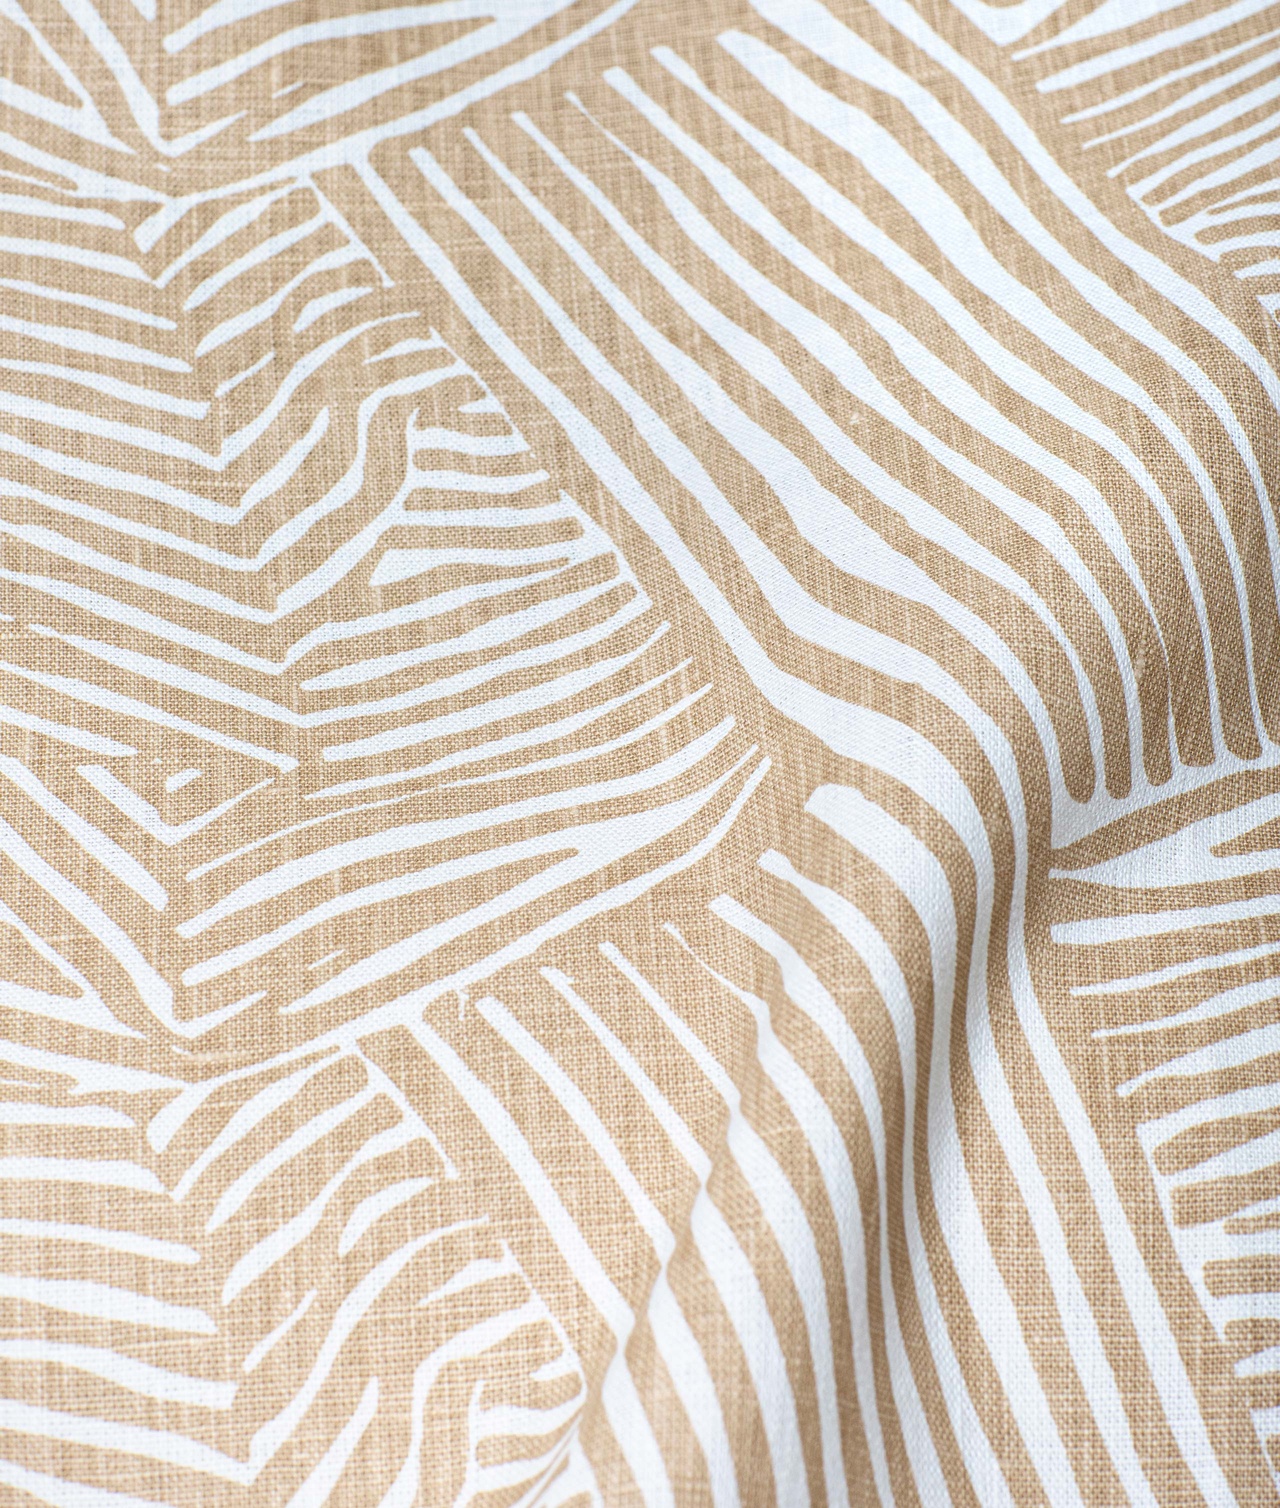 Sample Linen fabric ”FLÄTVERK"